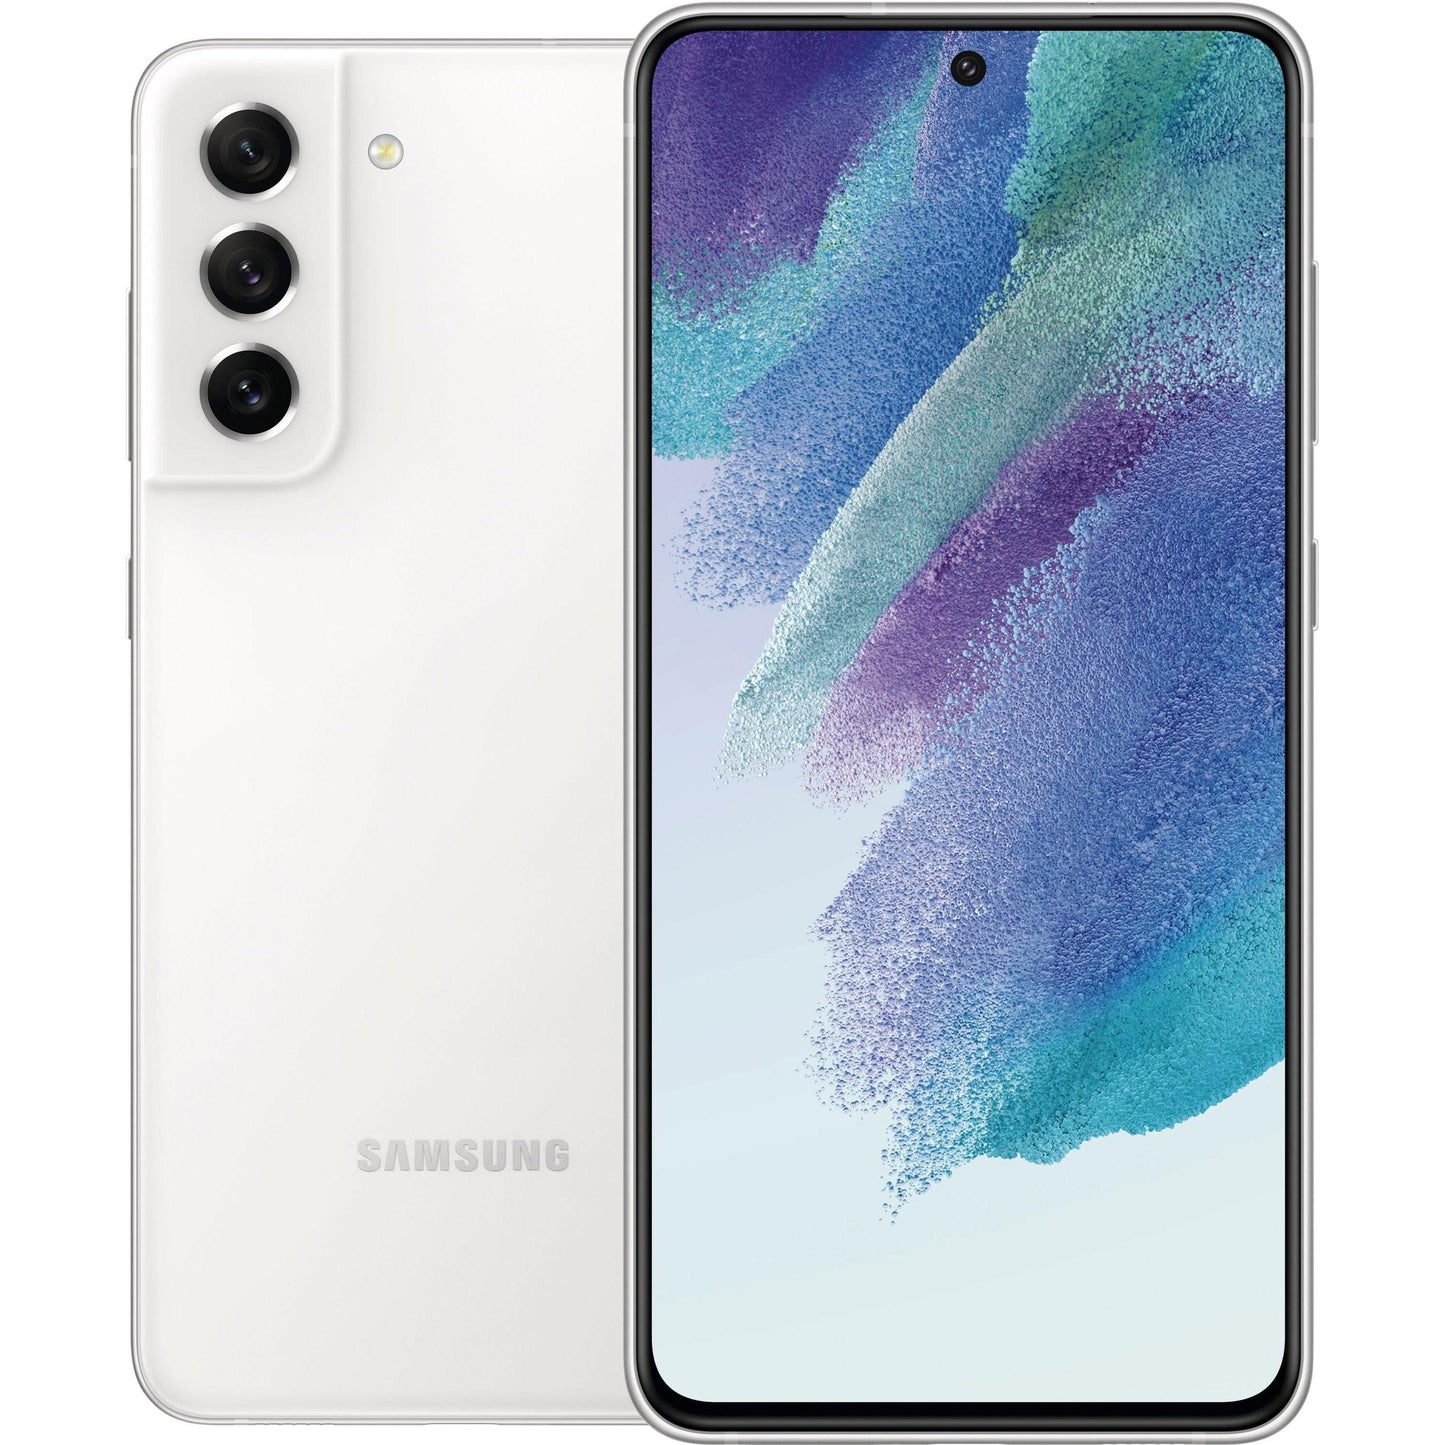 Samsung Galaxy S21 FE 5G - 128 GB - White - T-Mobile - Unlocked